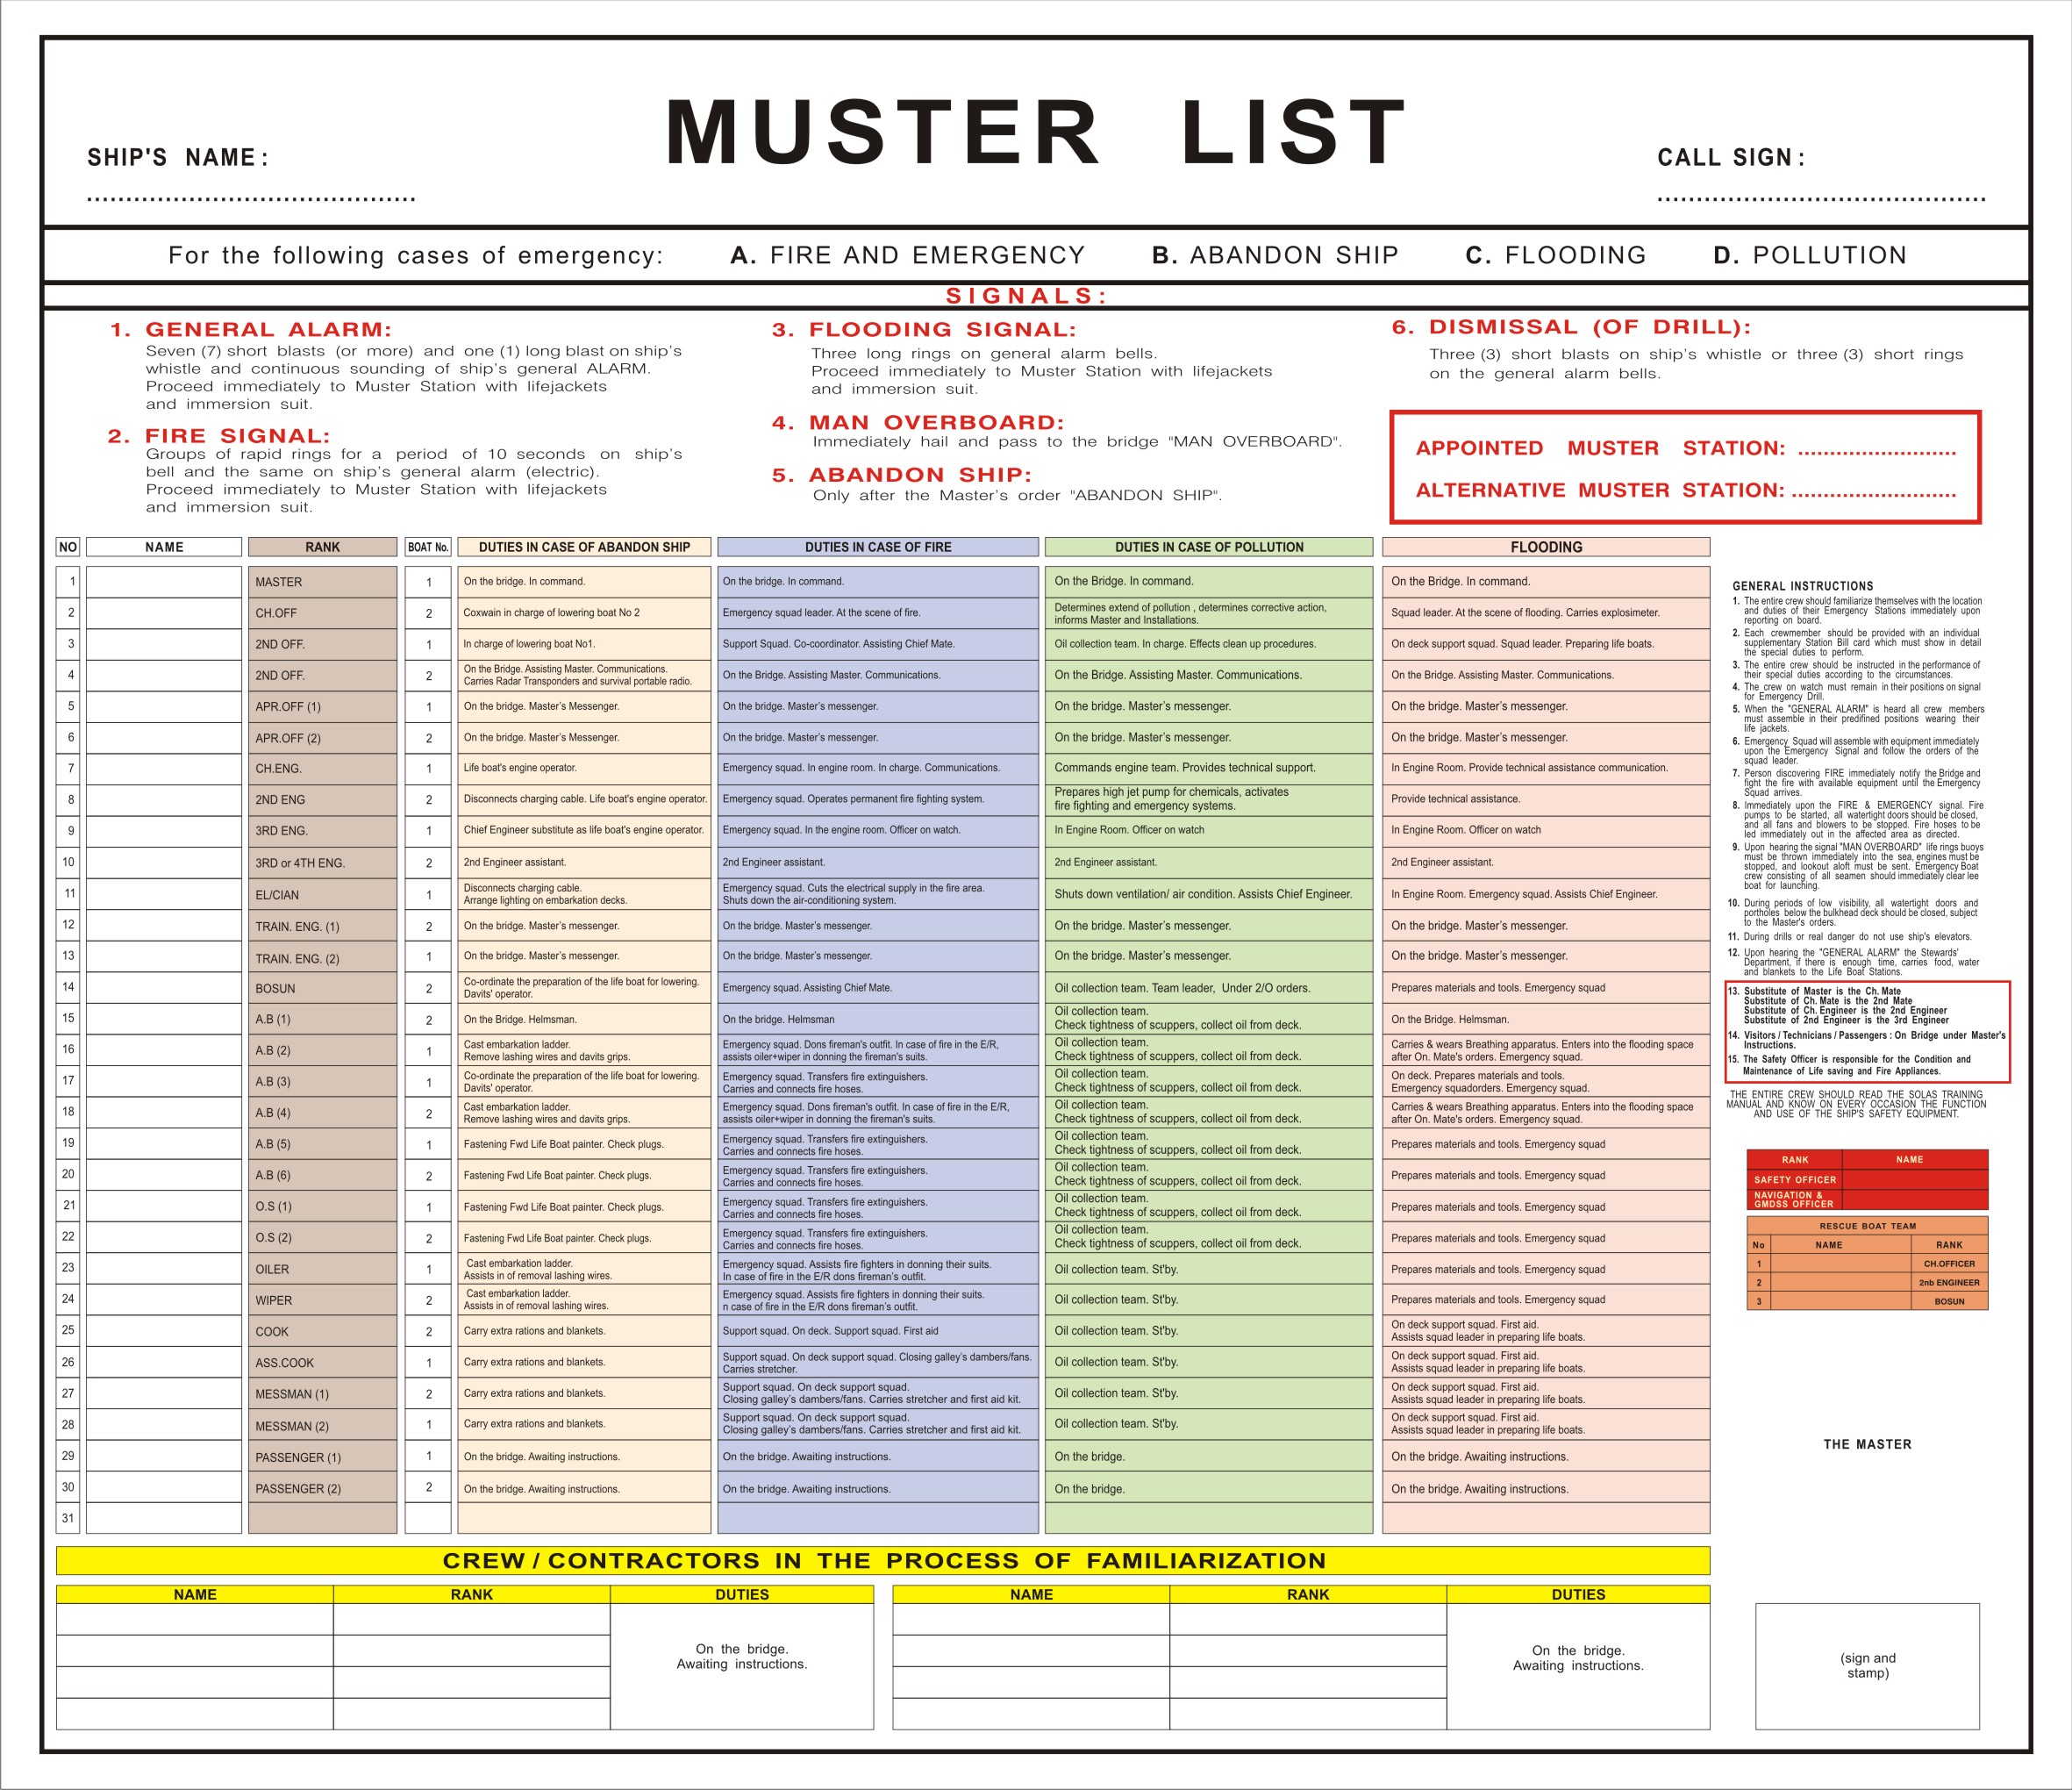 Ships list. Muster list. Master list на судне. Muster list расписание по тревогам. Muster list on ship.